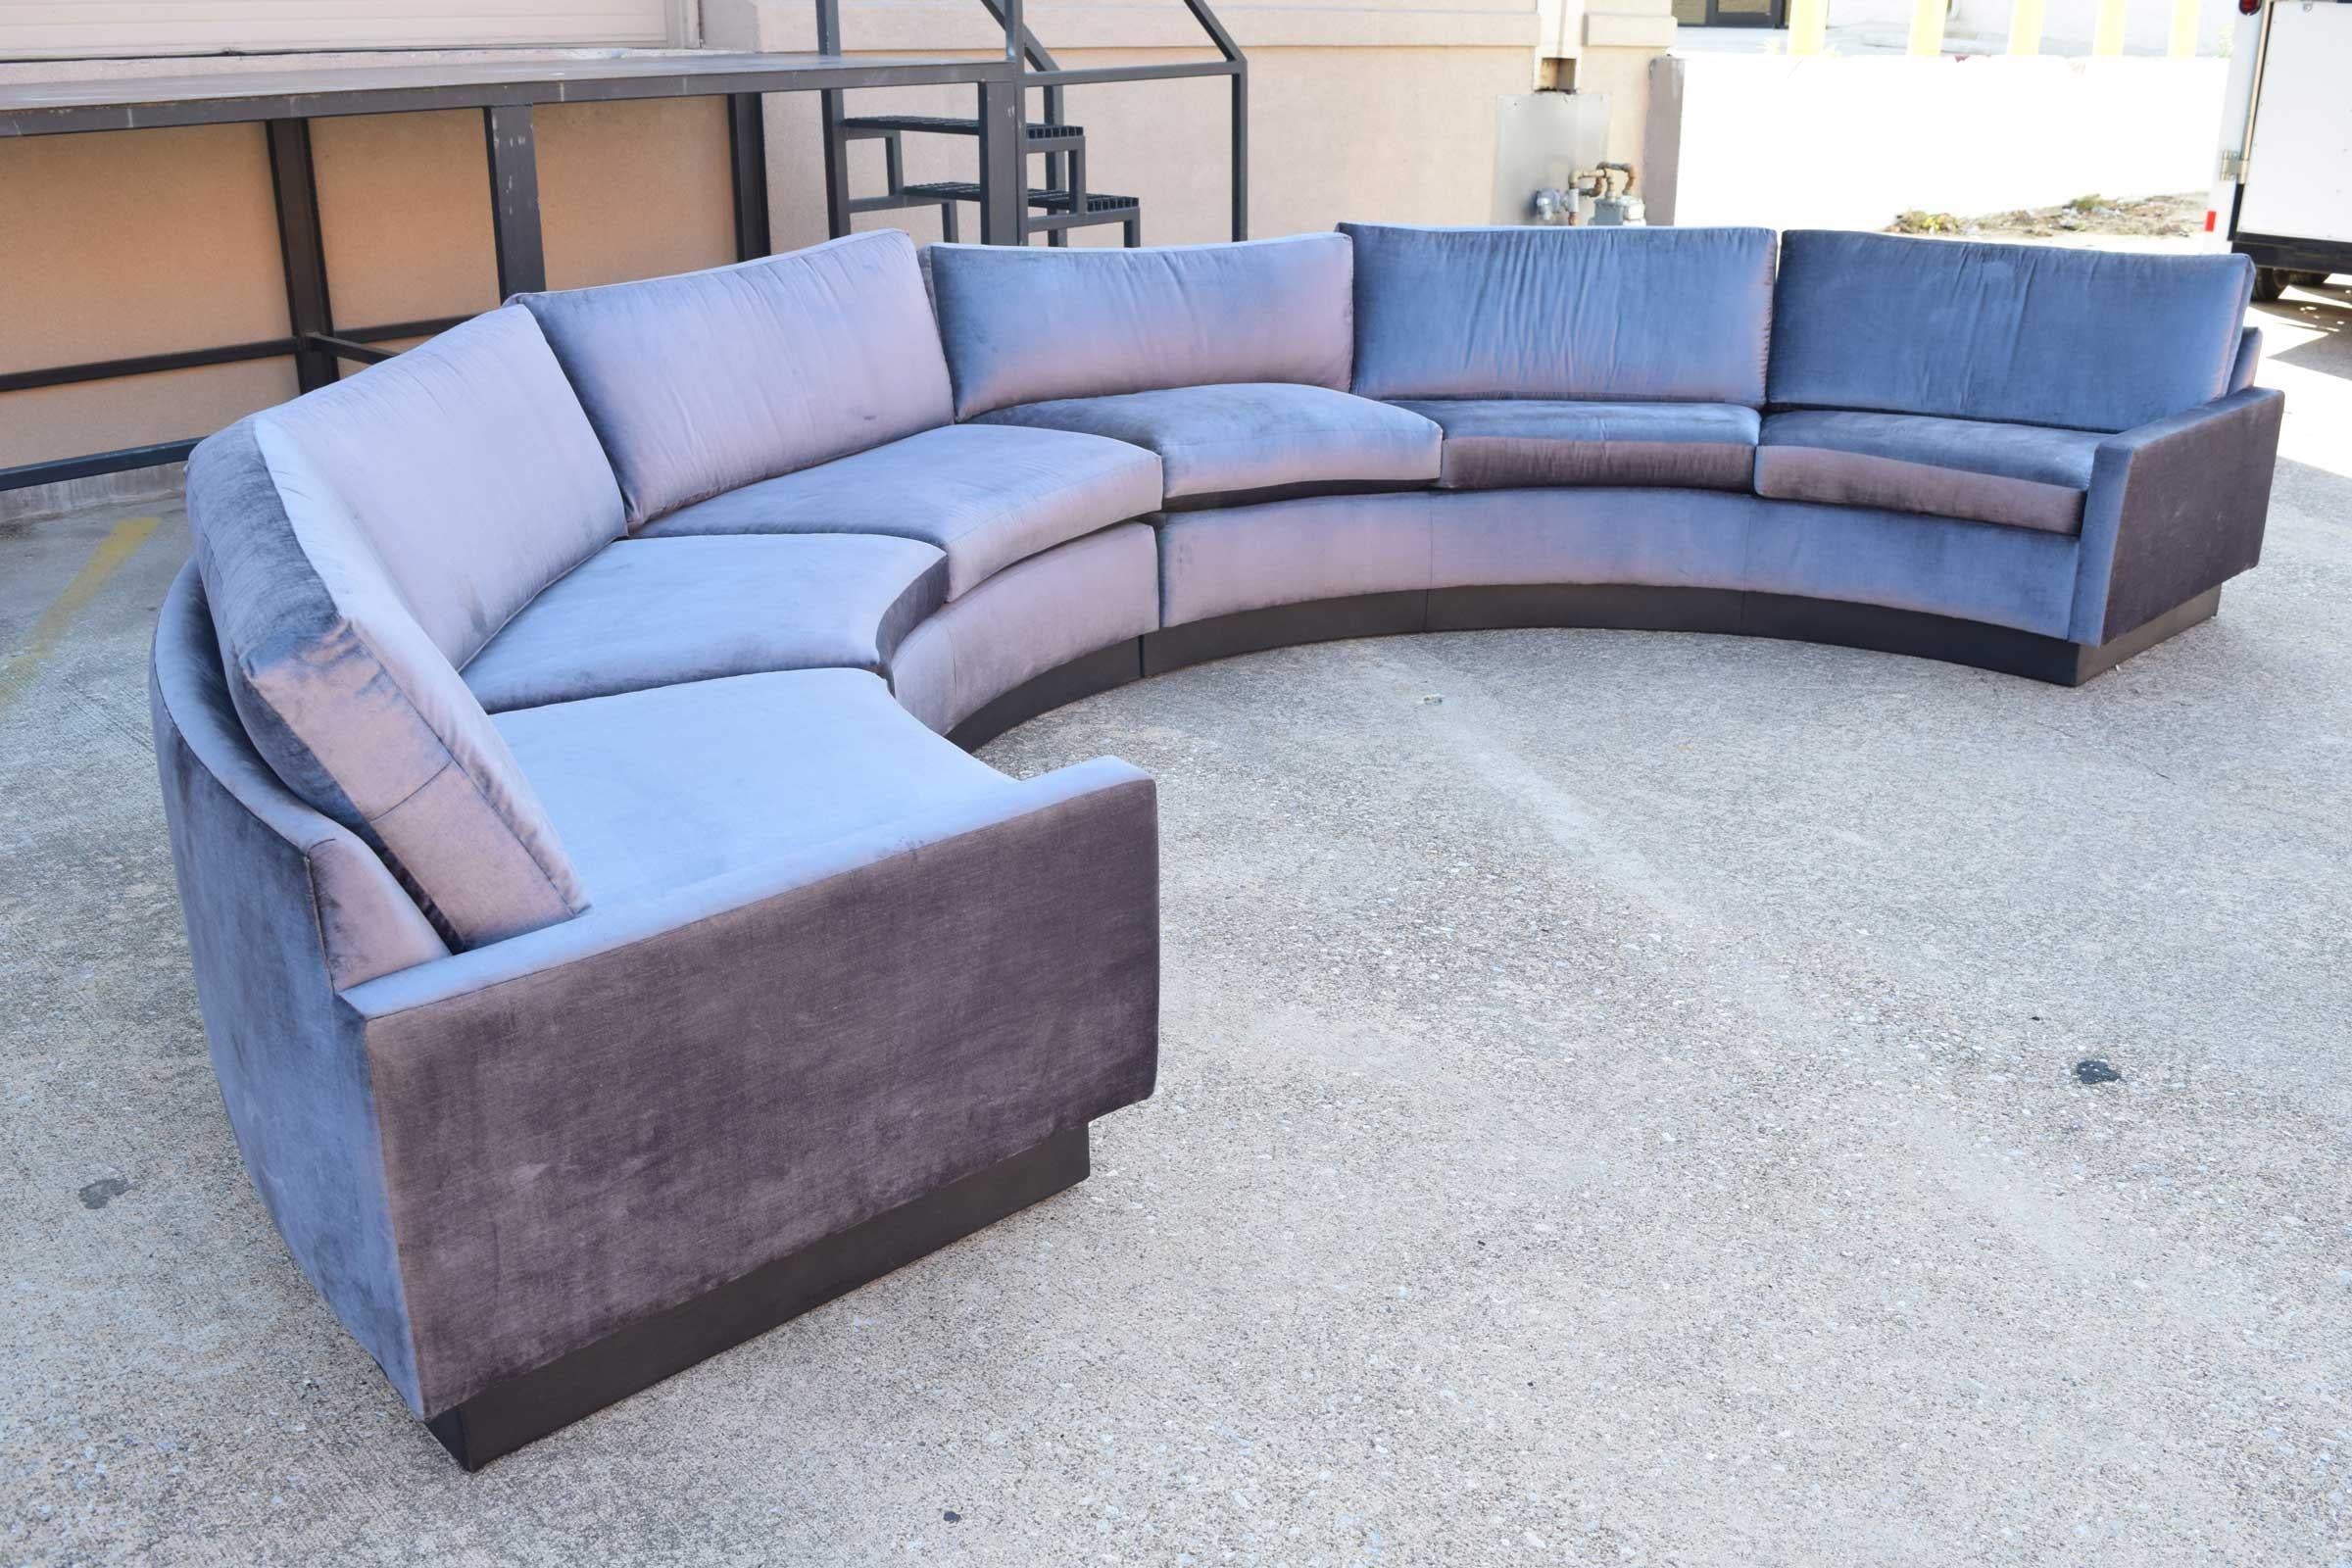 North American Milo Baughman Style Circular Sofa in Gray Velvet